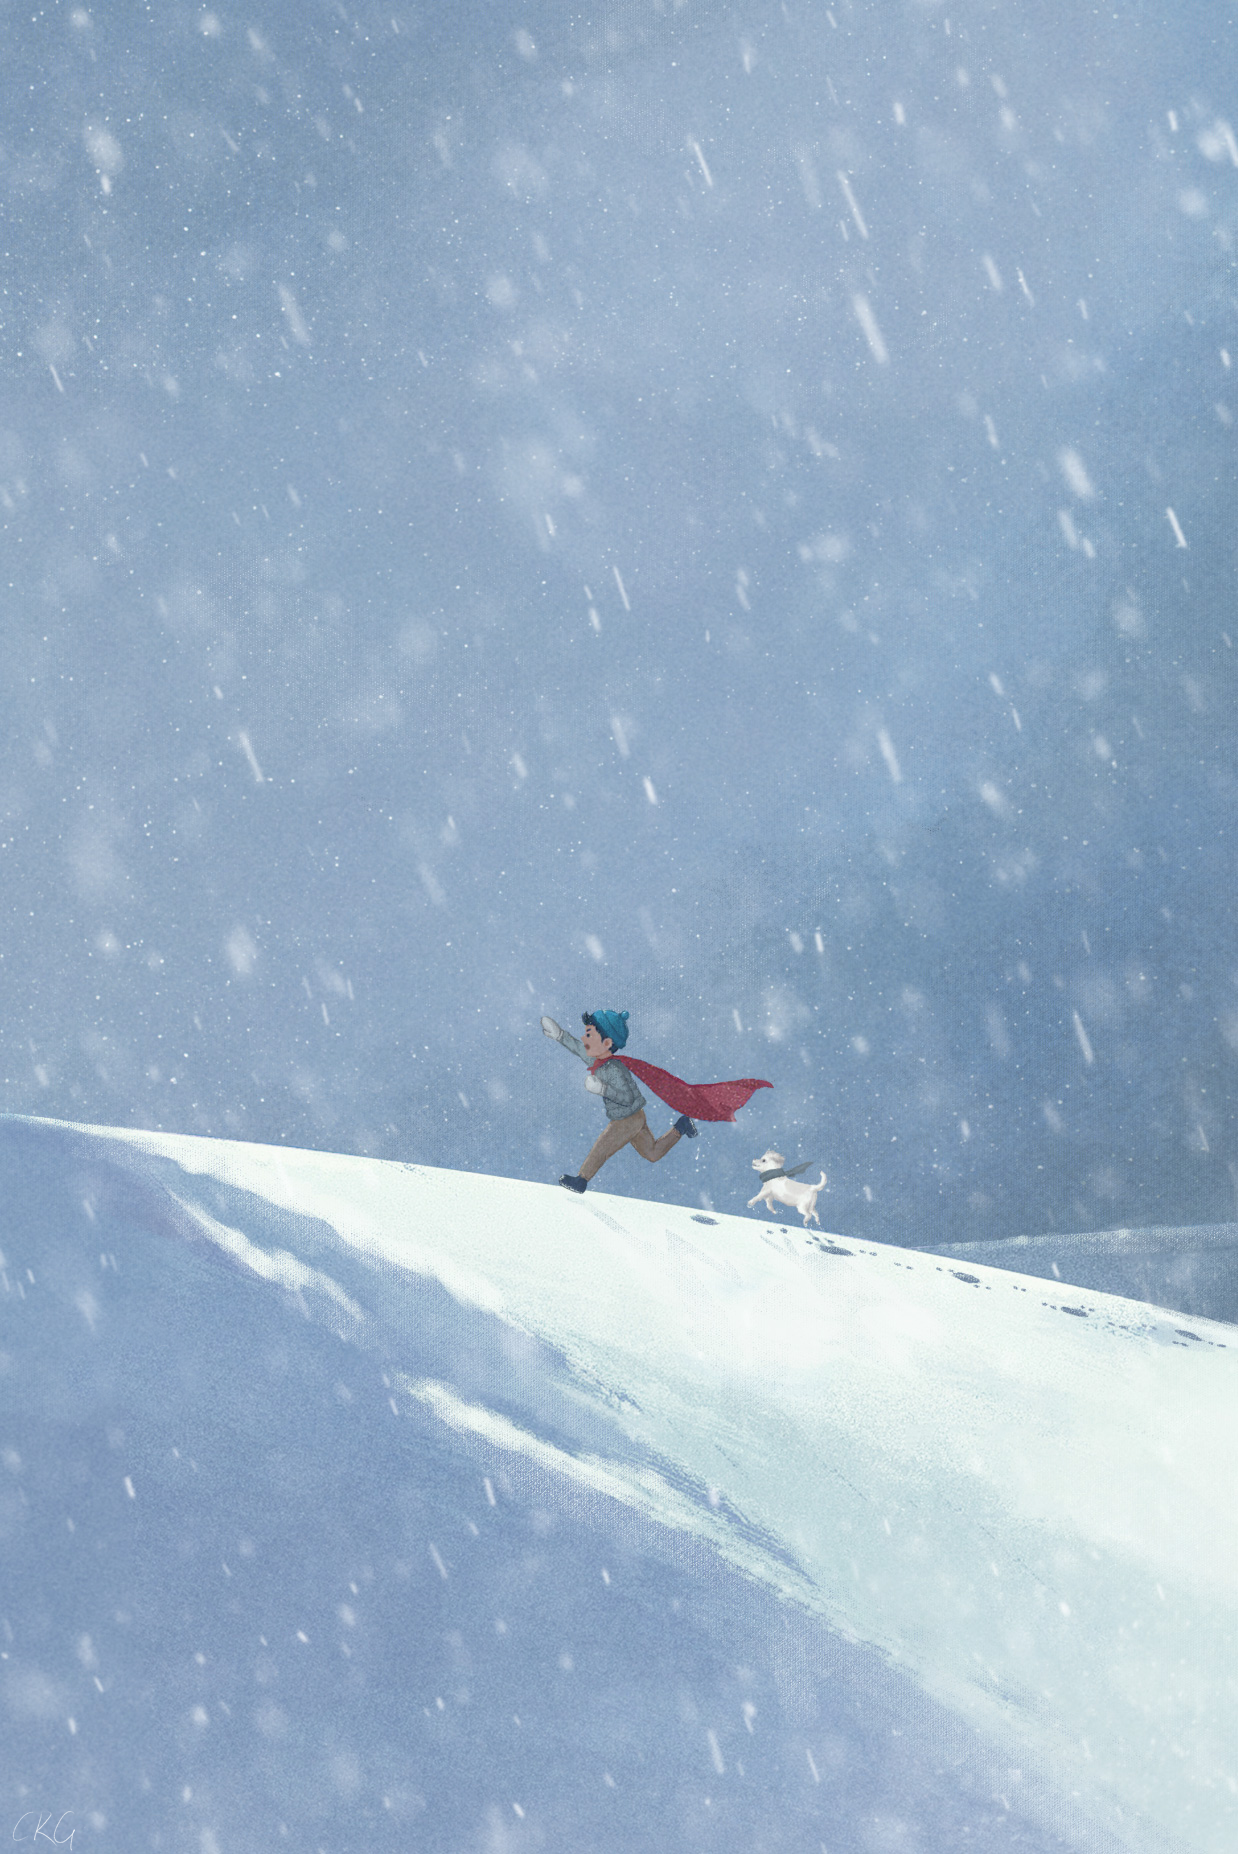 Anime 1238x1854 digital art anime anime boys dog outdoors nature field sky winter snow running portrait display signature